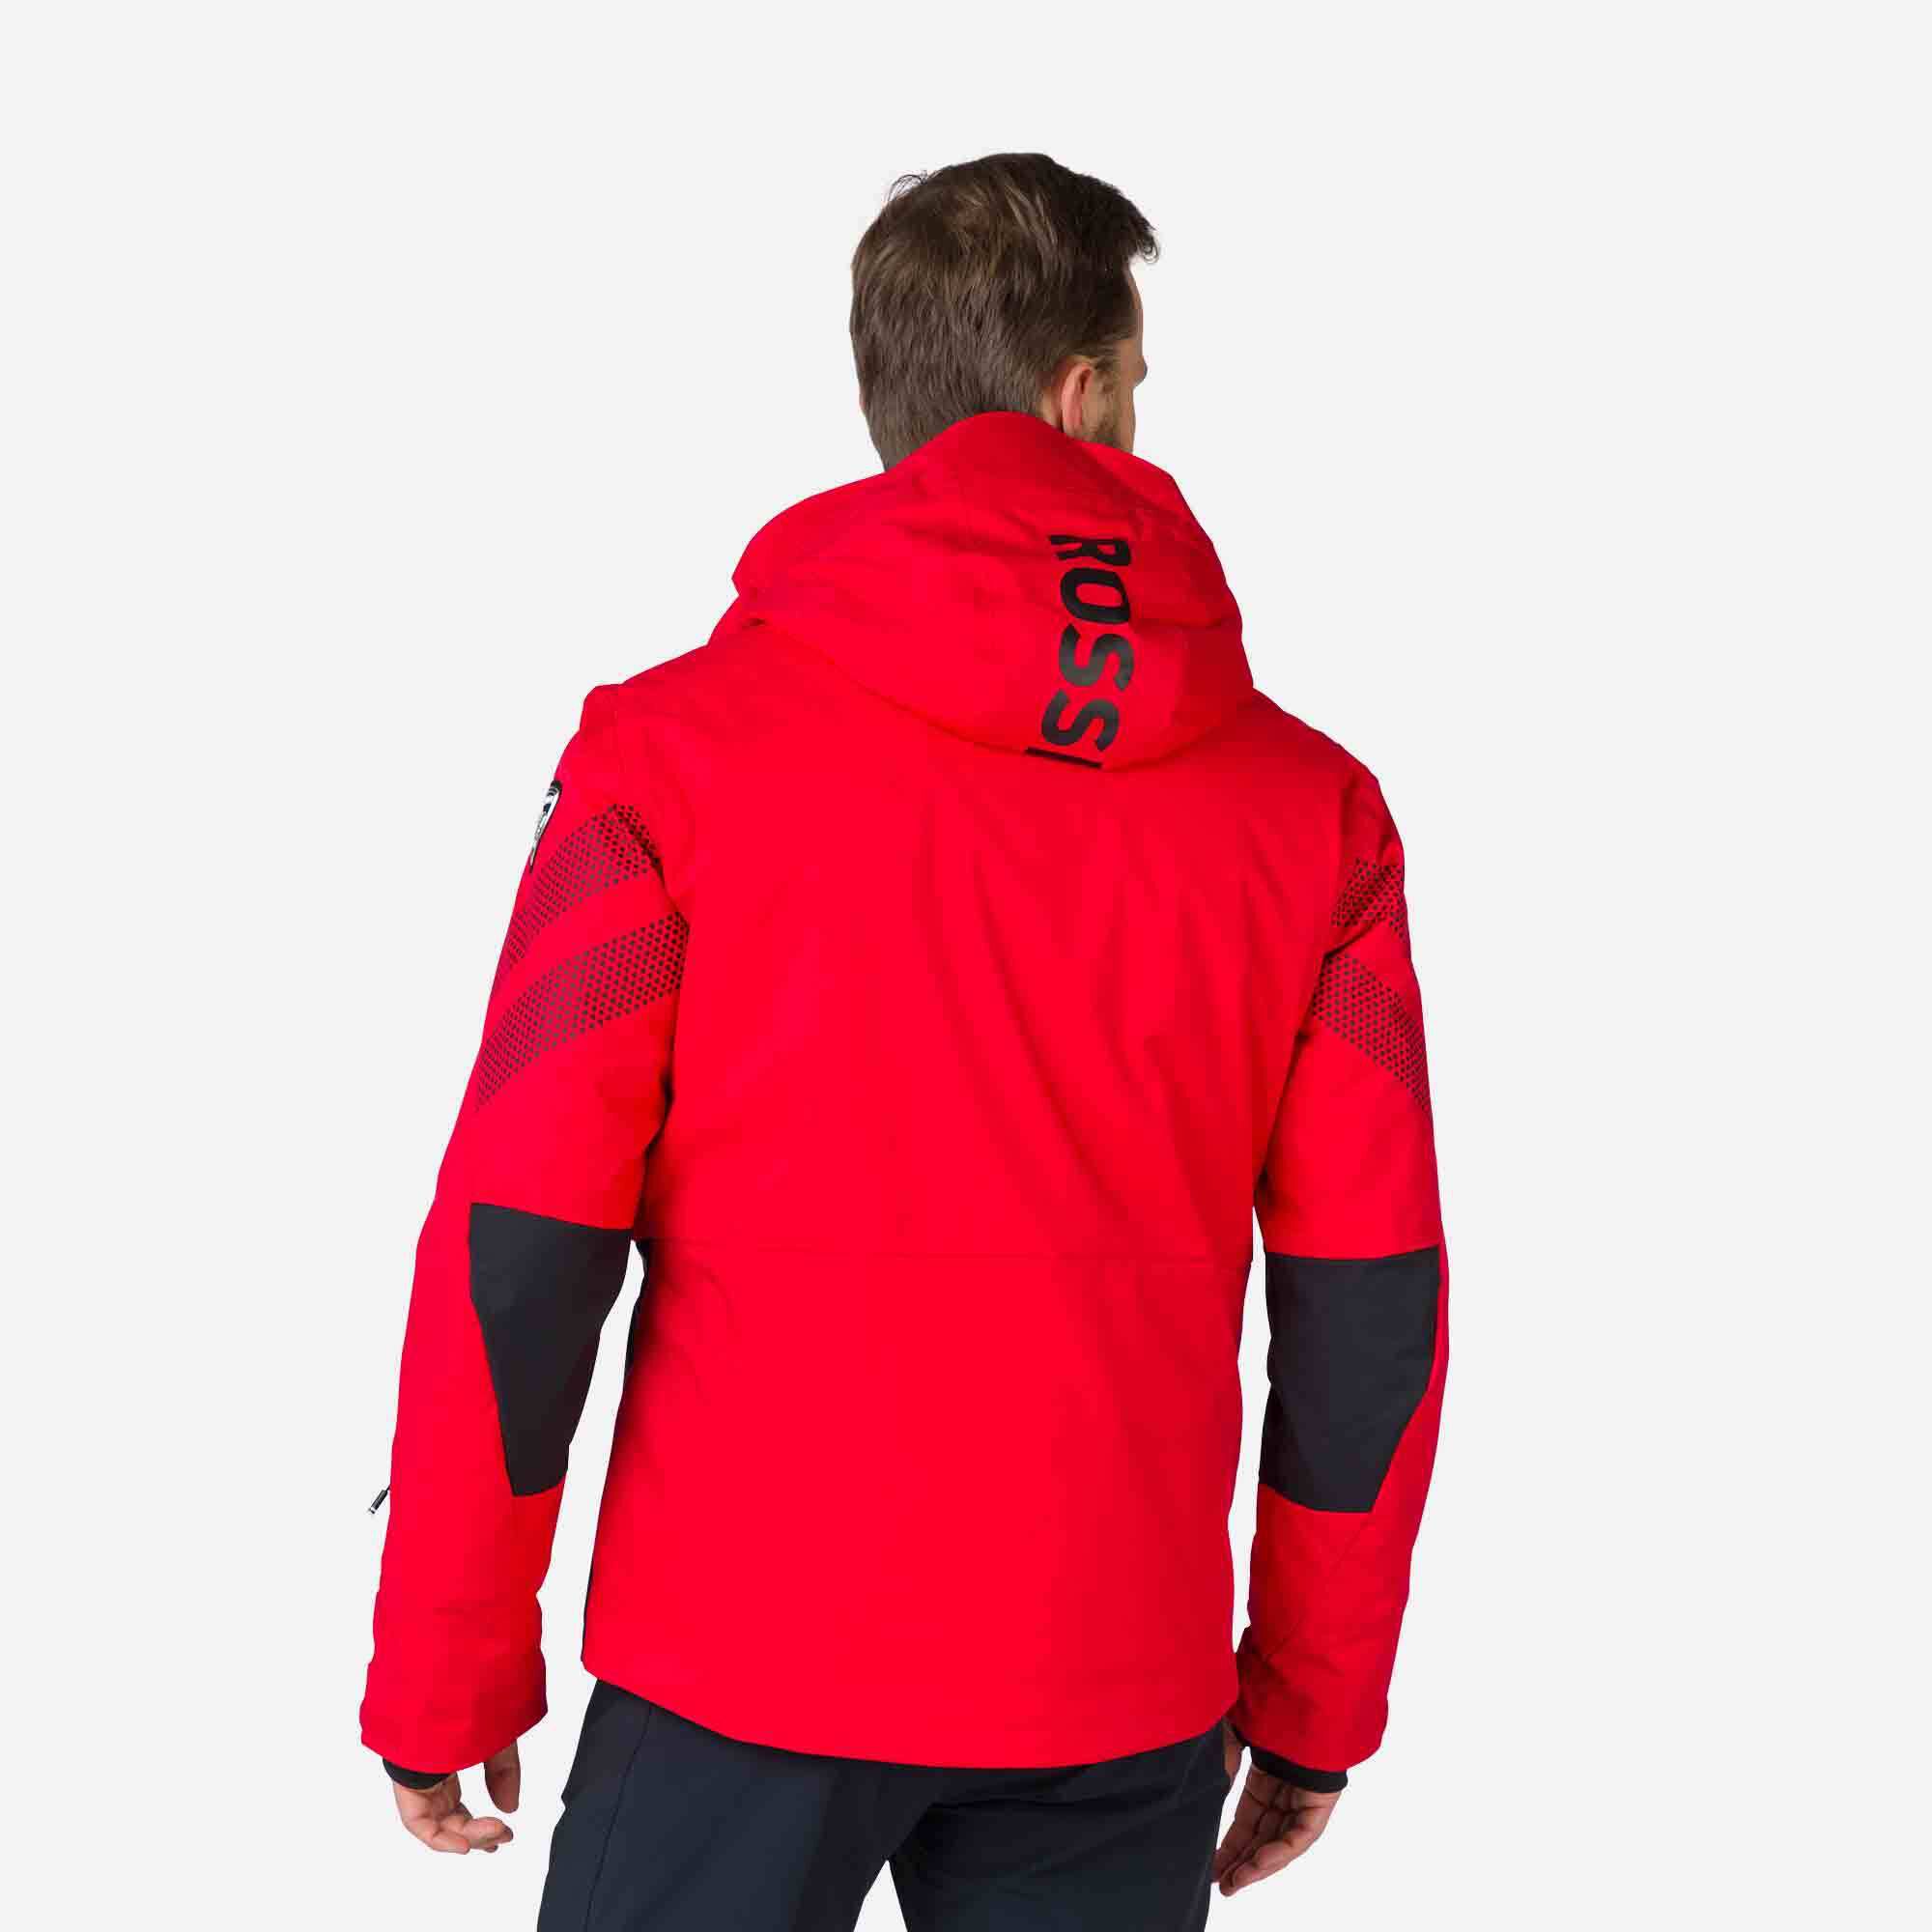 Men's Insulated Ski Jacket - Gray